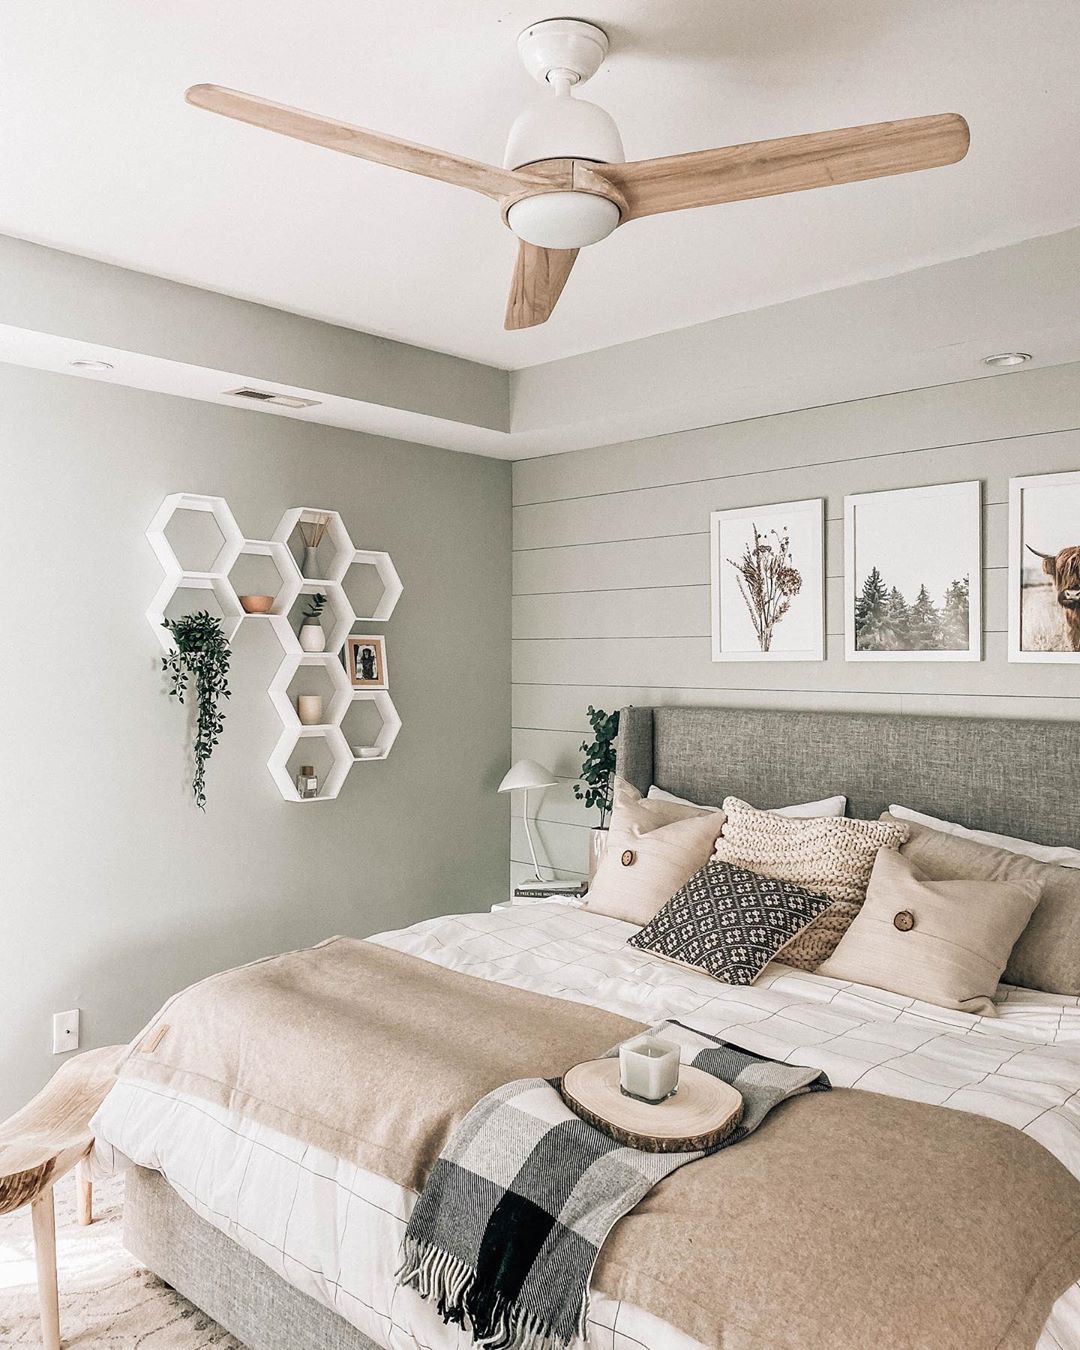 Ceiling fan in master bedroom. Photo by Instagram user @prettyinthepines